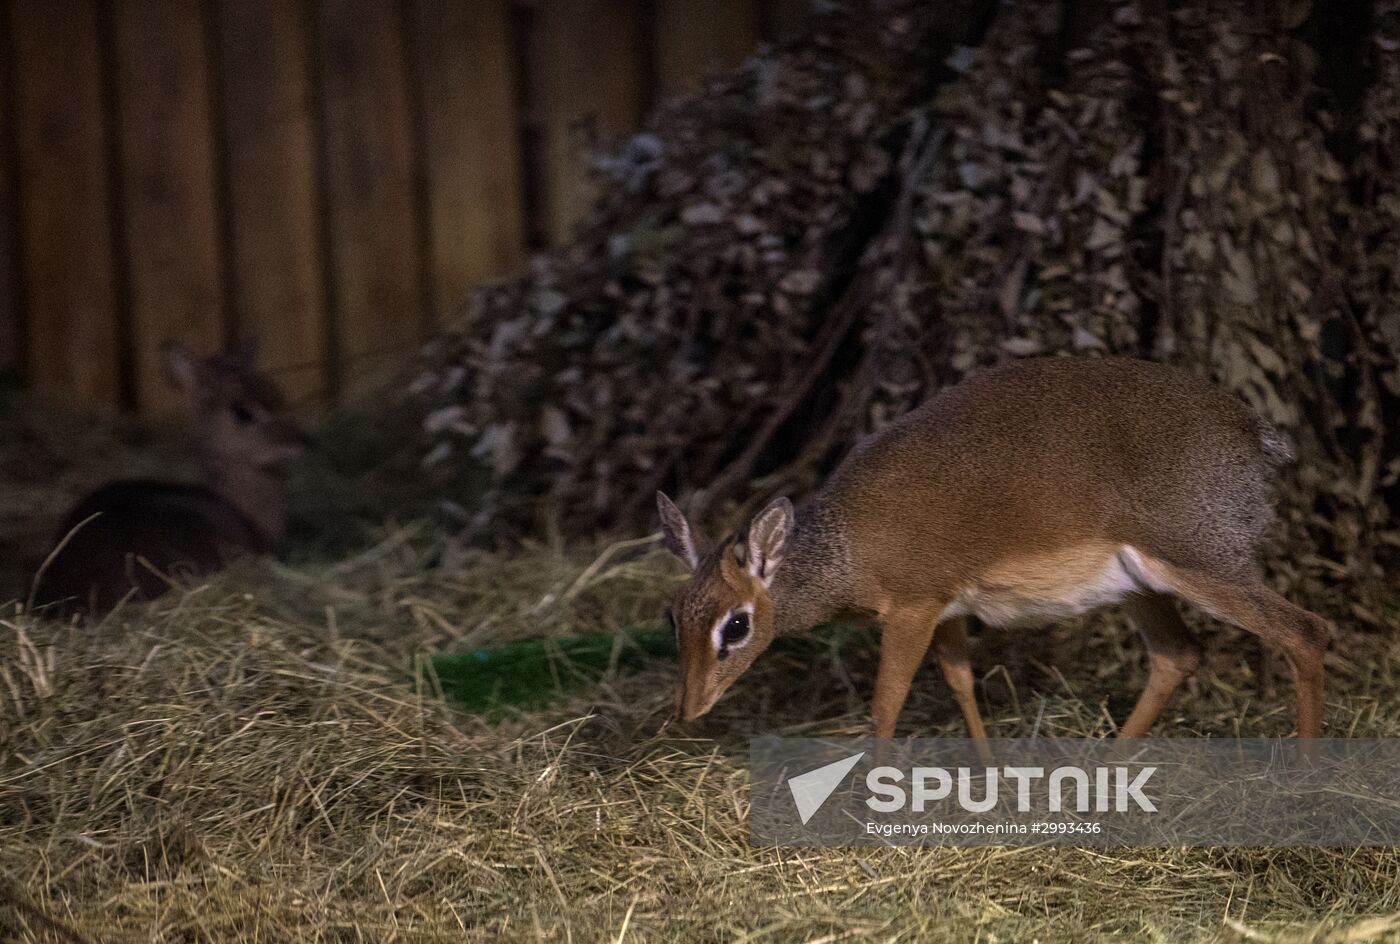 Dik-dik antelope calf born at Moscow Zoo